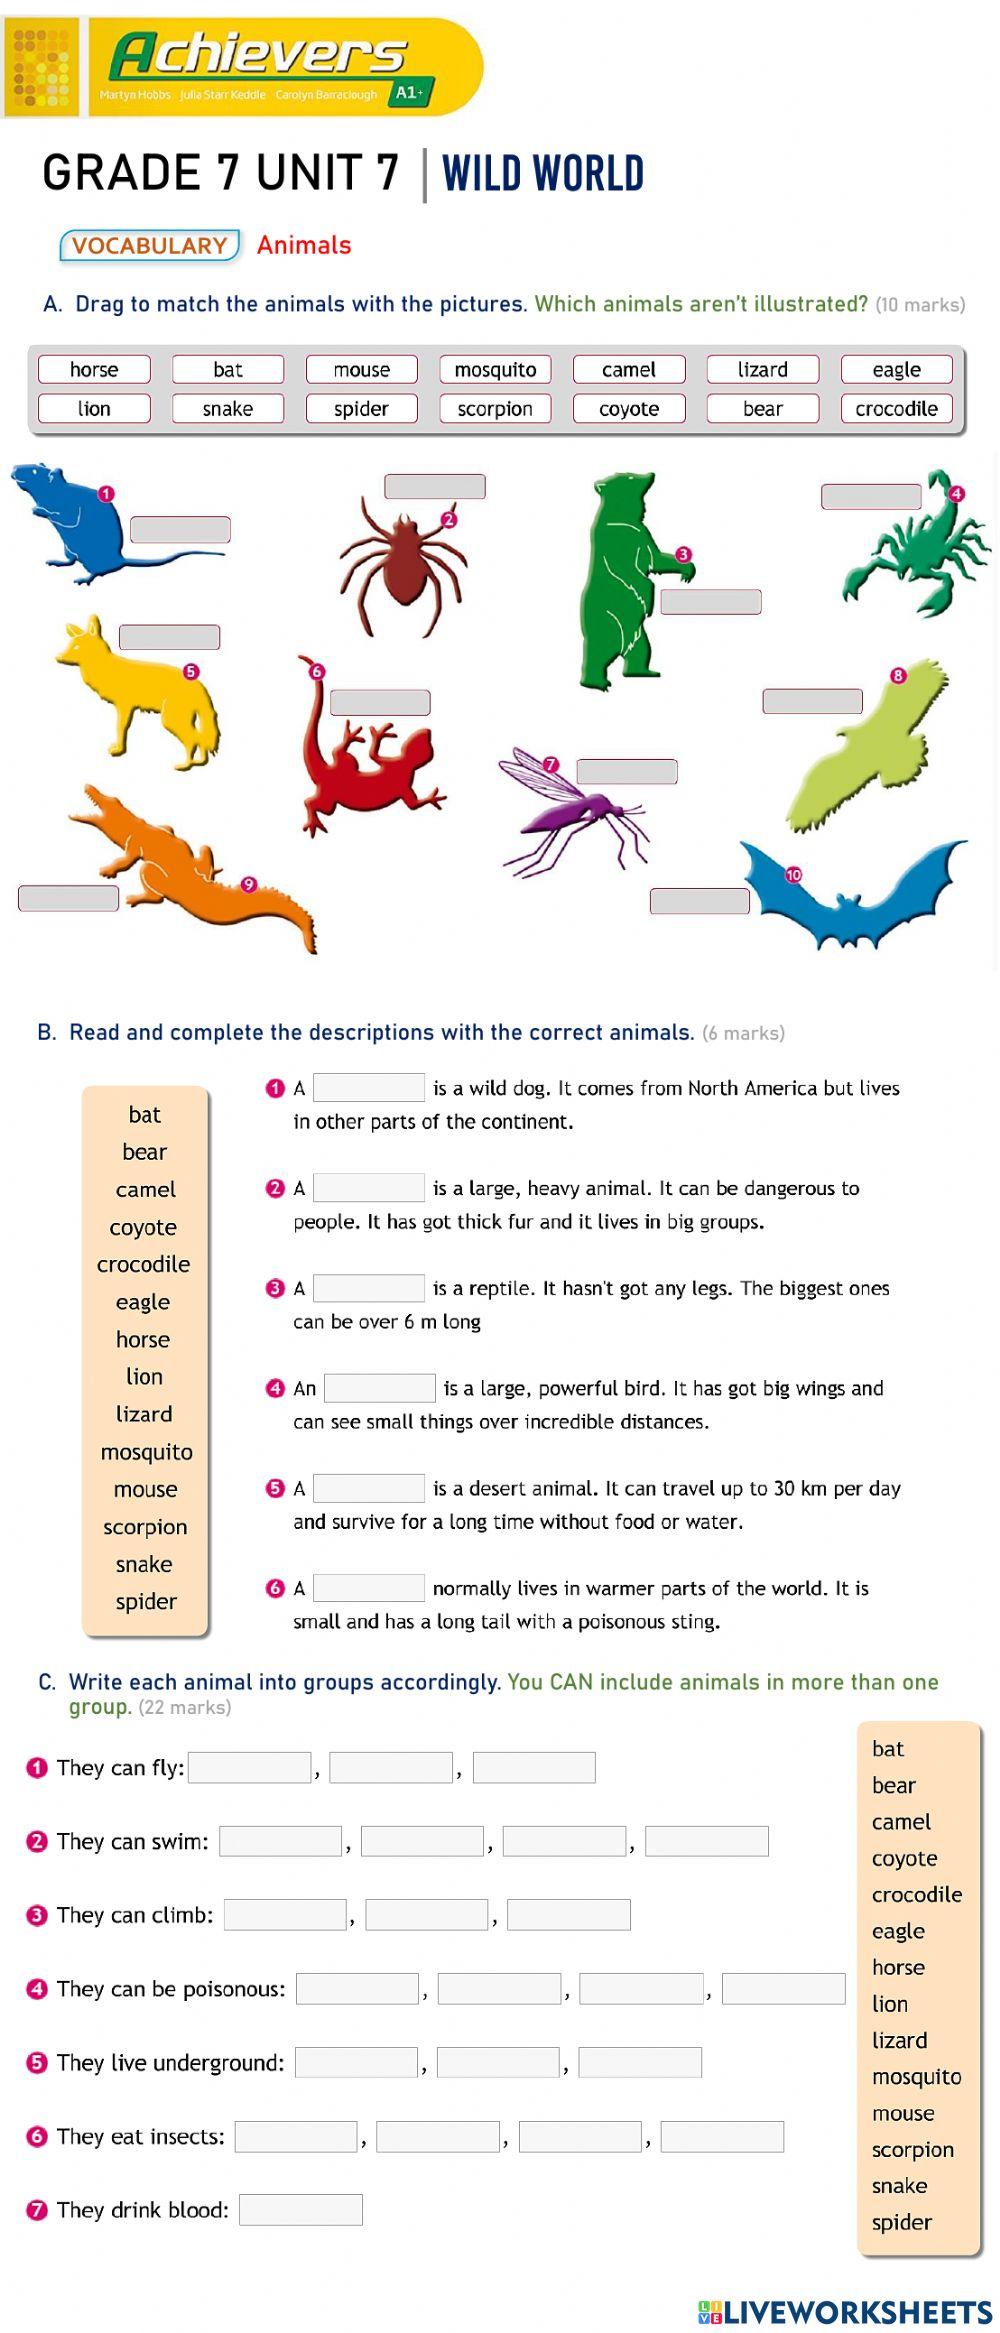 Grade 7 English UNIT 7 WILD WORLD - Animals (Vocabulary)